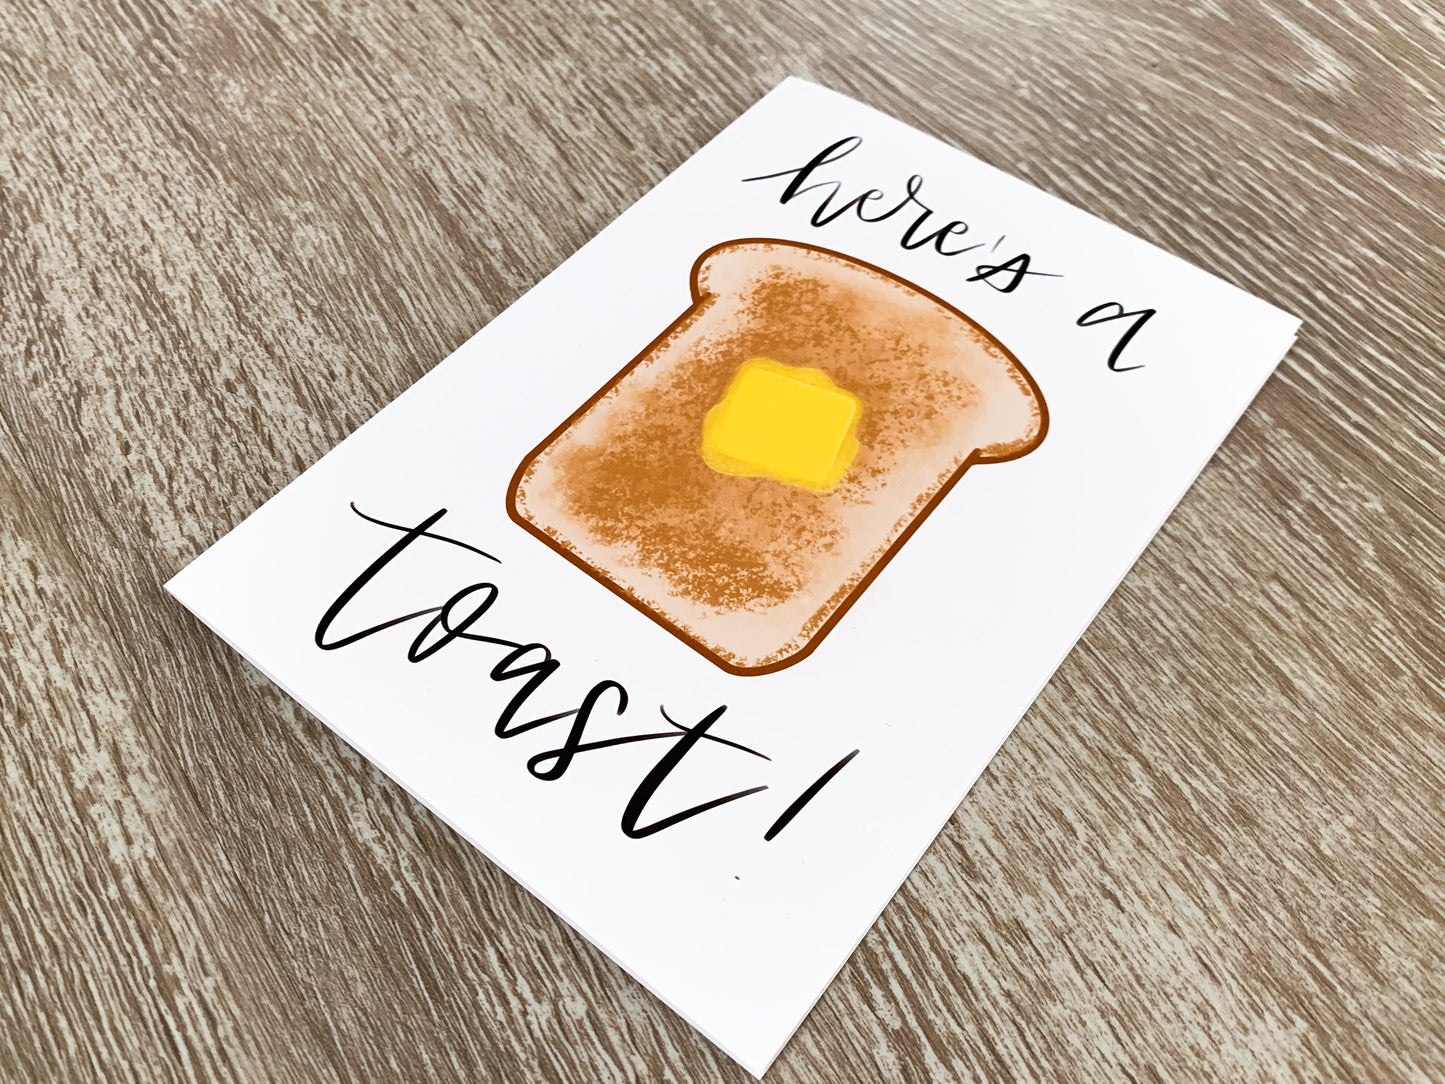 Here's a Toast Handmade Celebration Card Congrats by StoneDonut Design